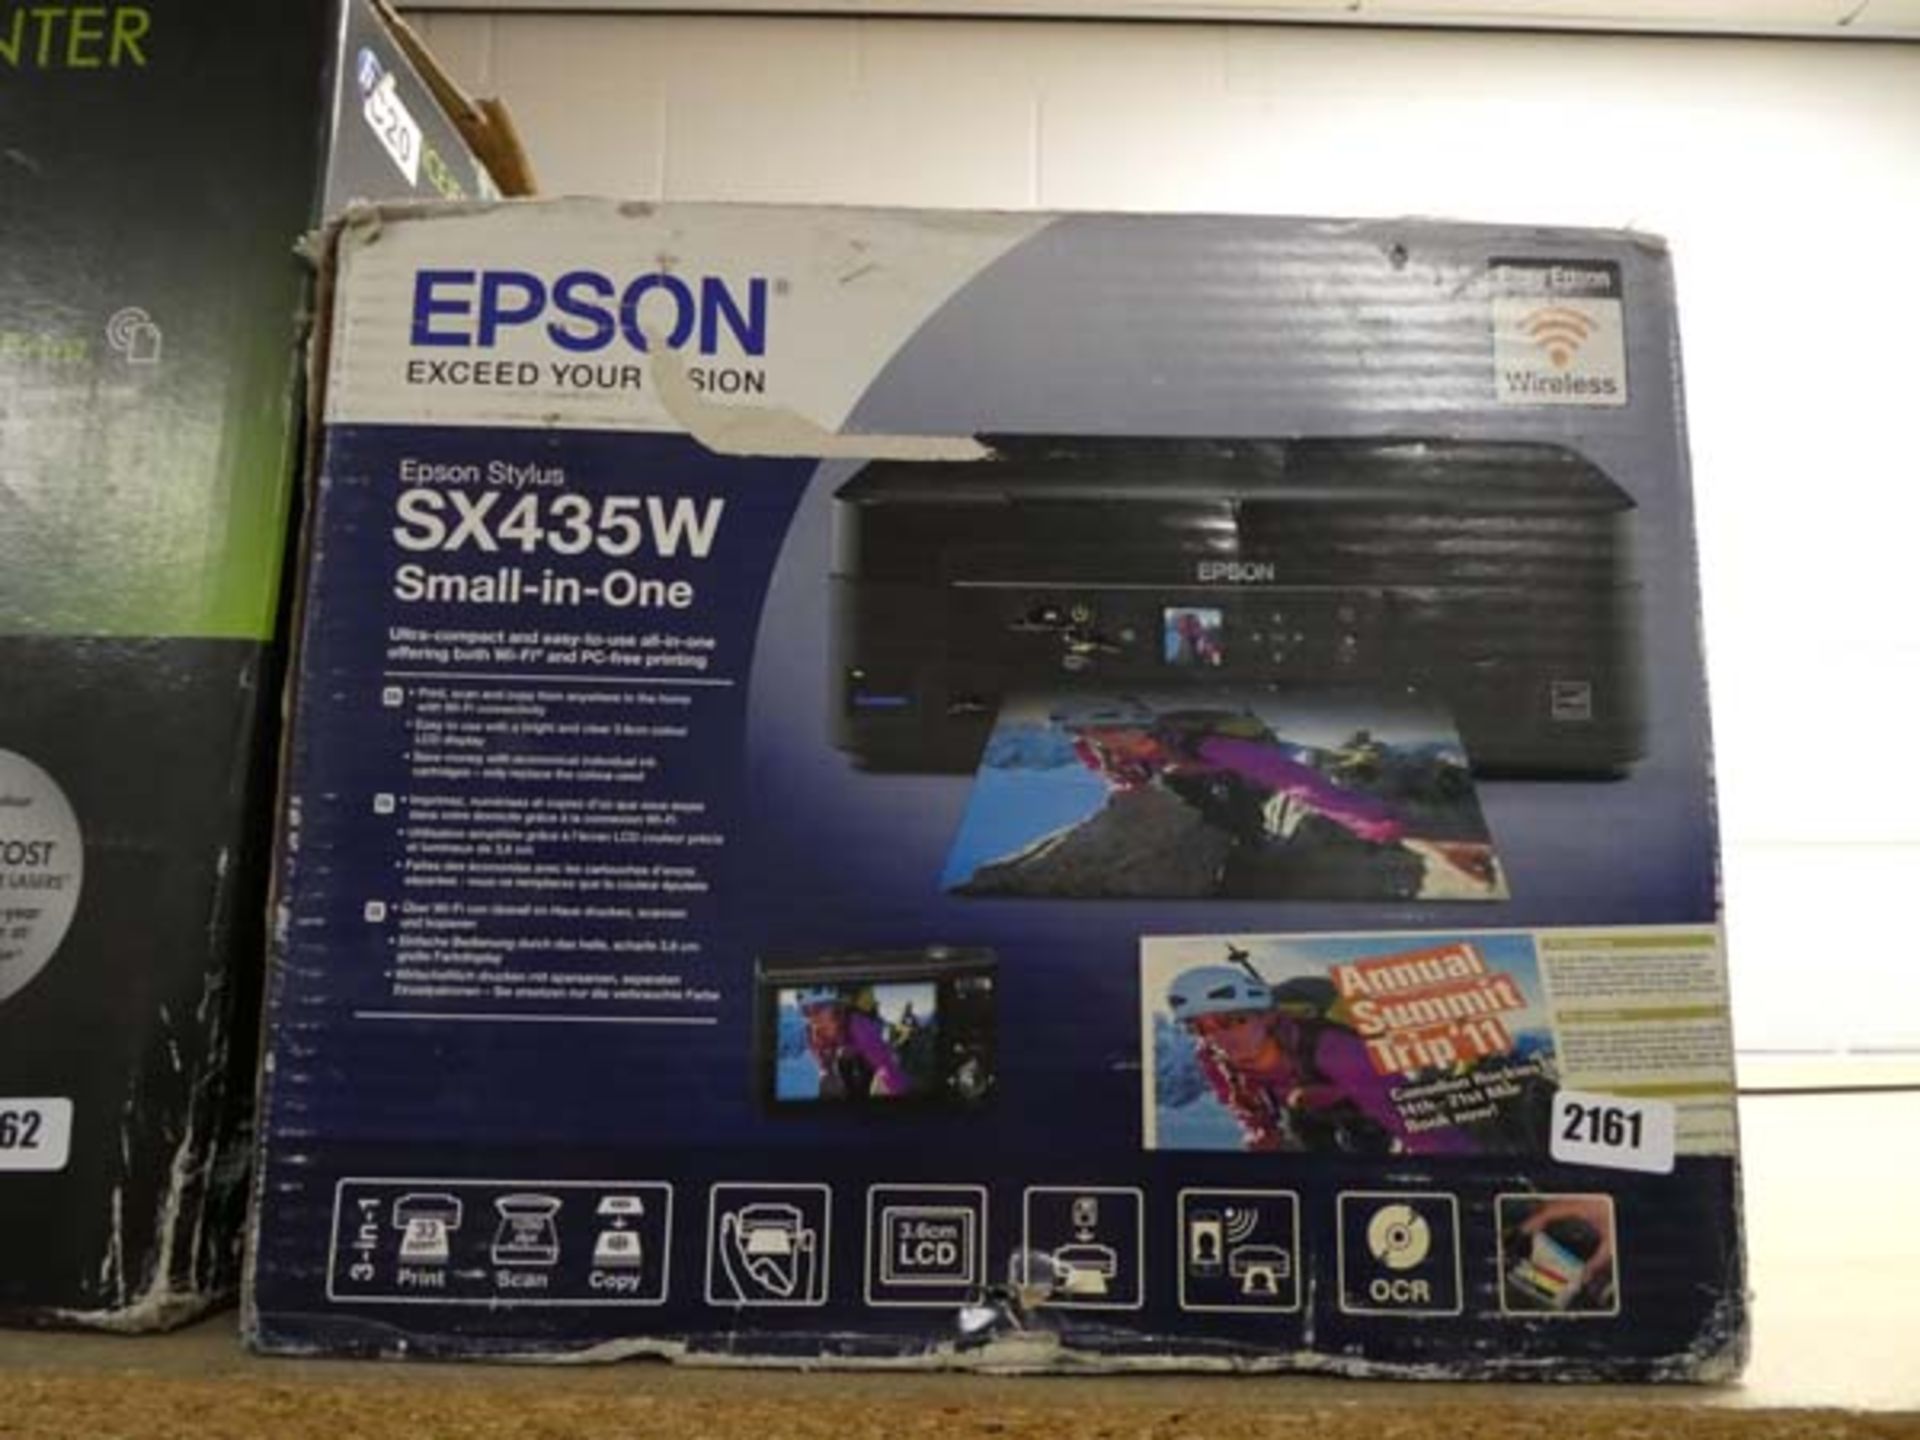 Epsom SX435W all in one printer in box